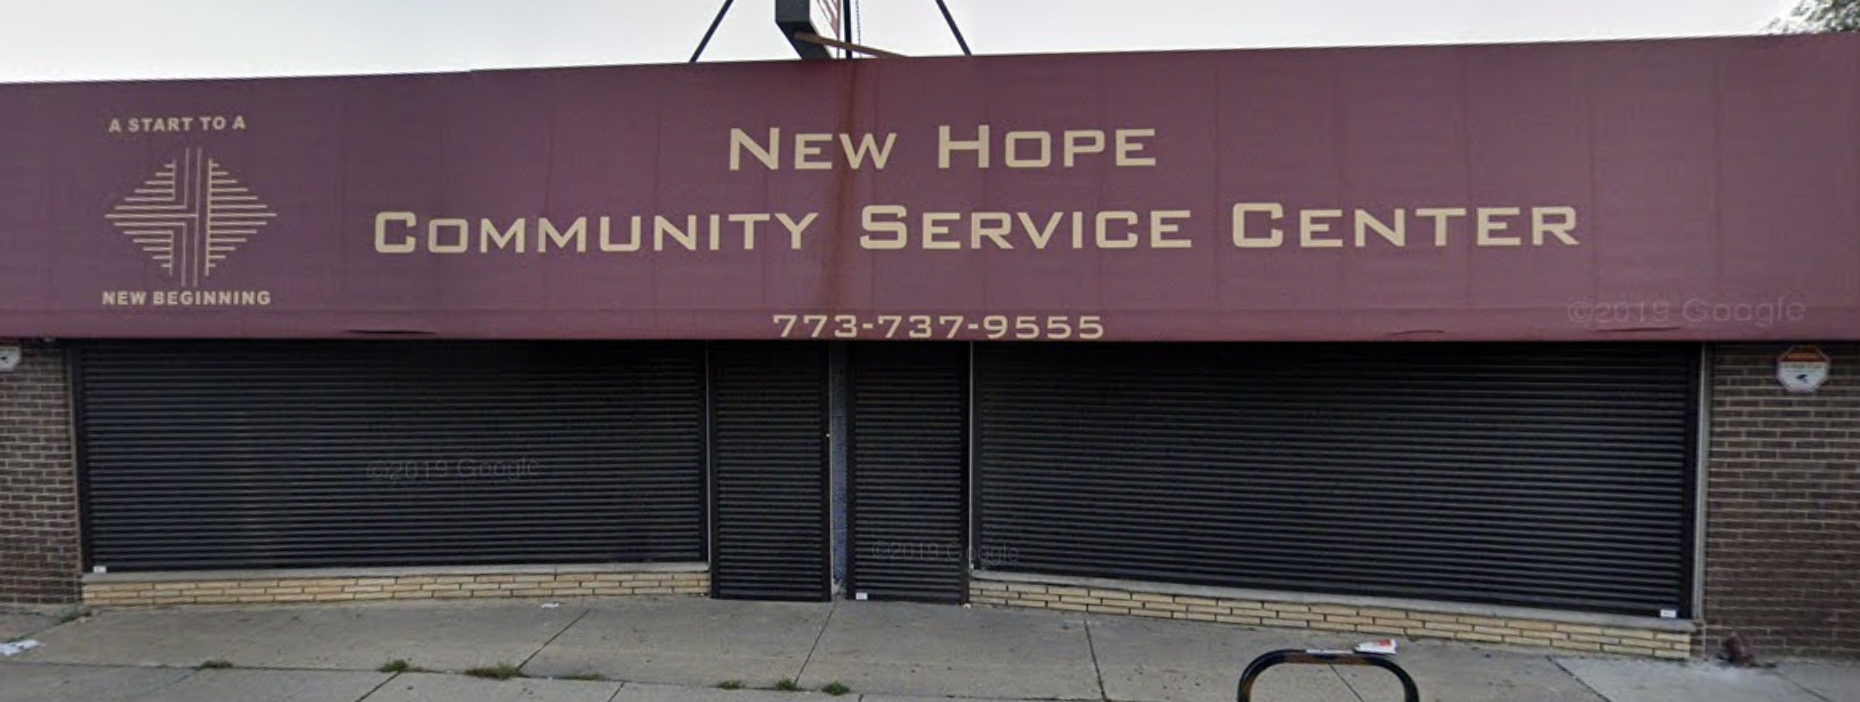 New Hope Community Service Center